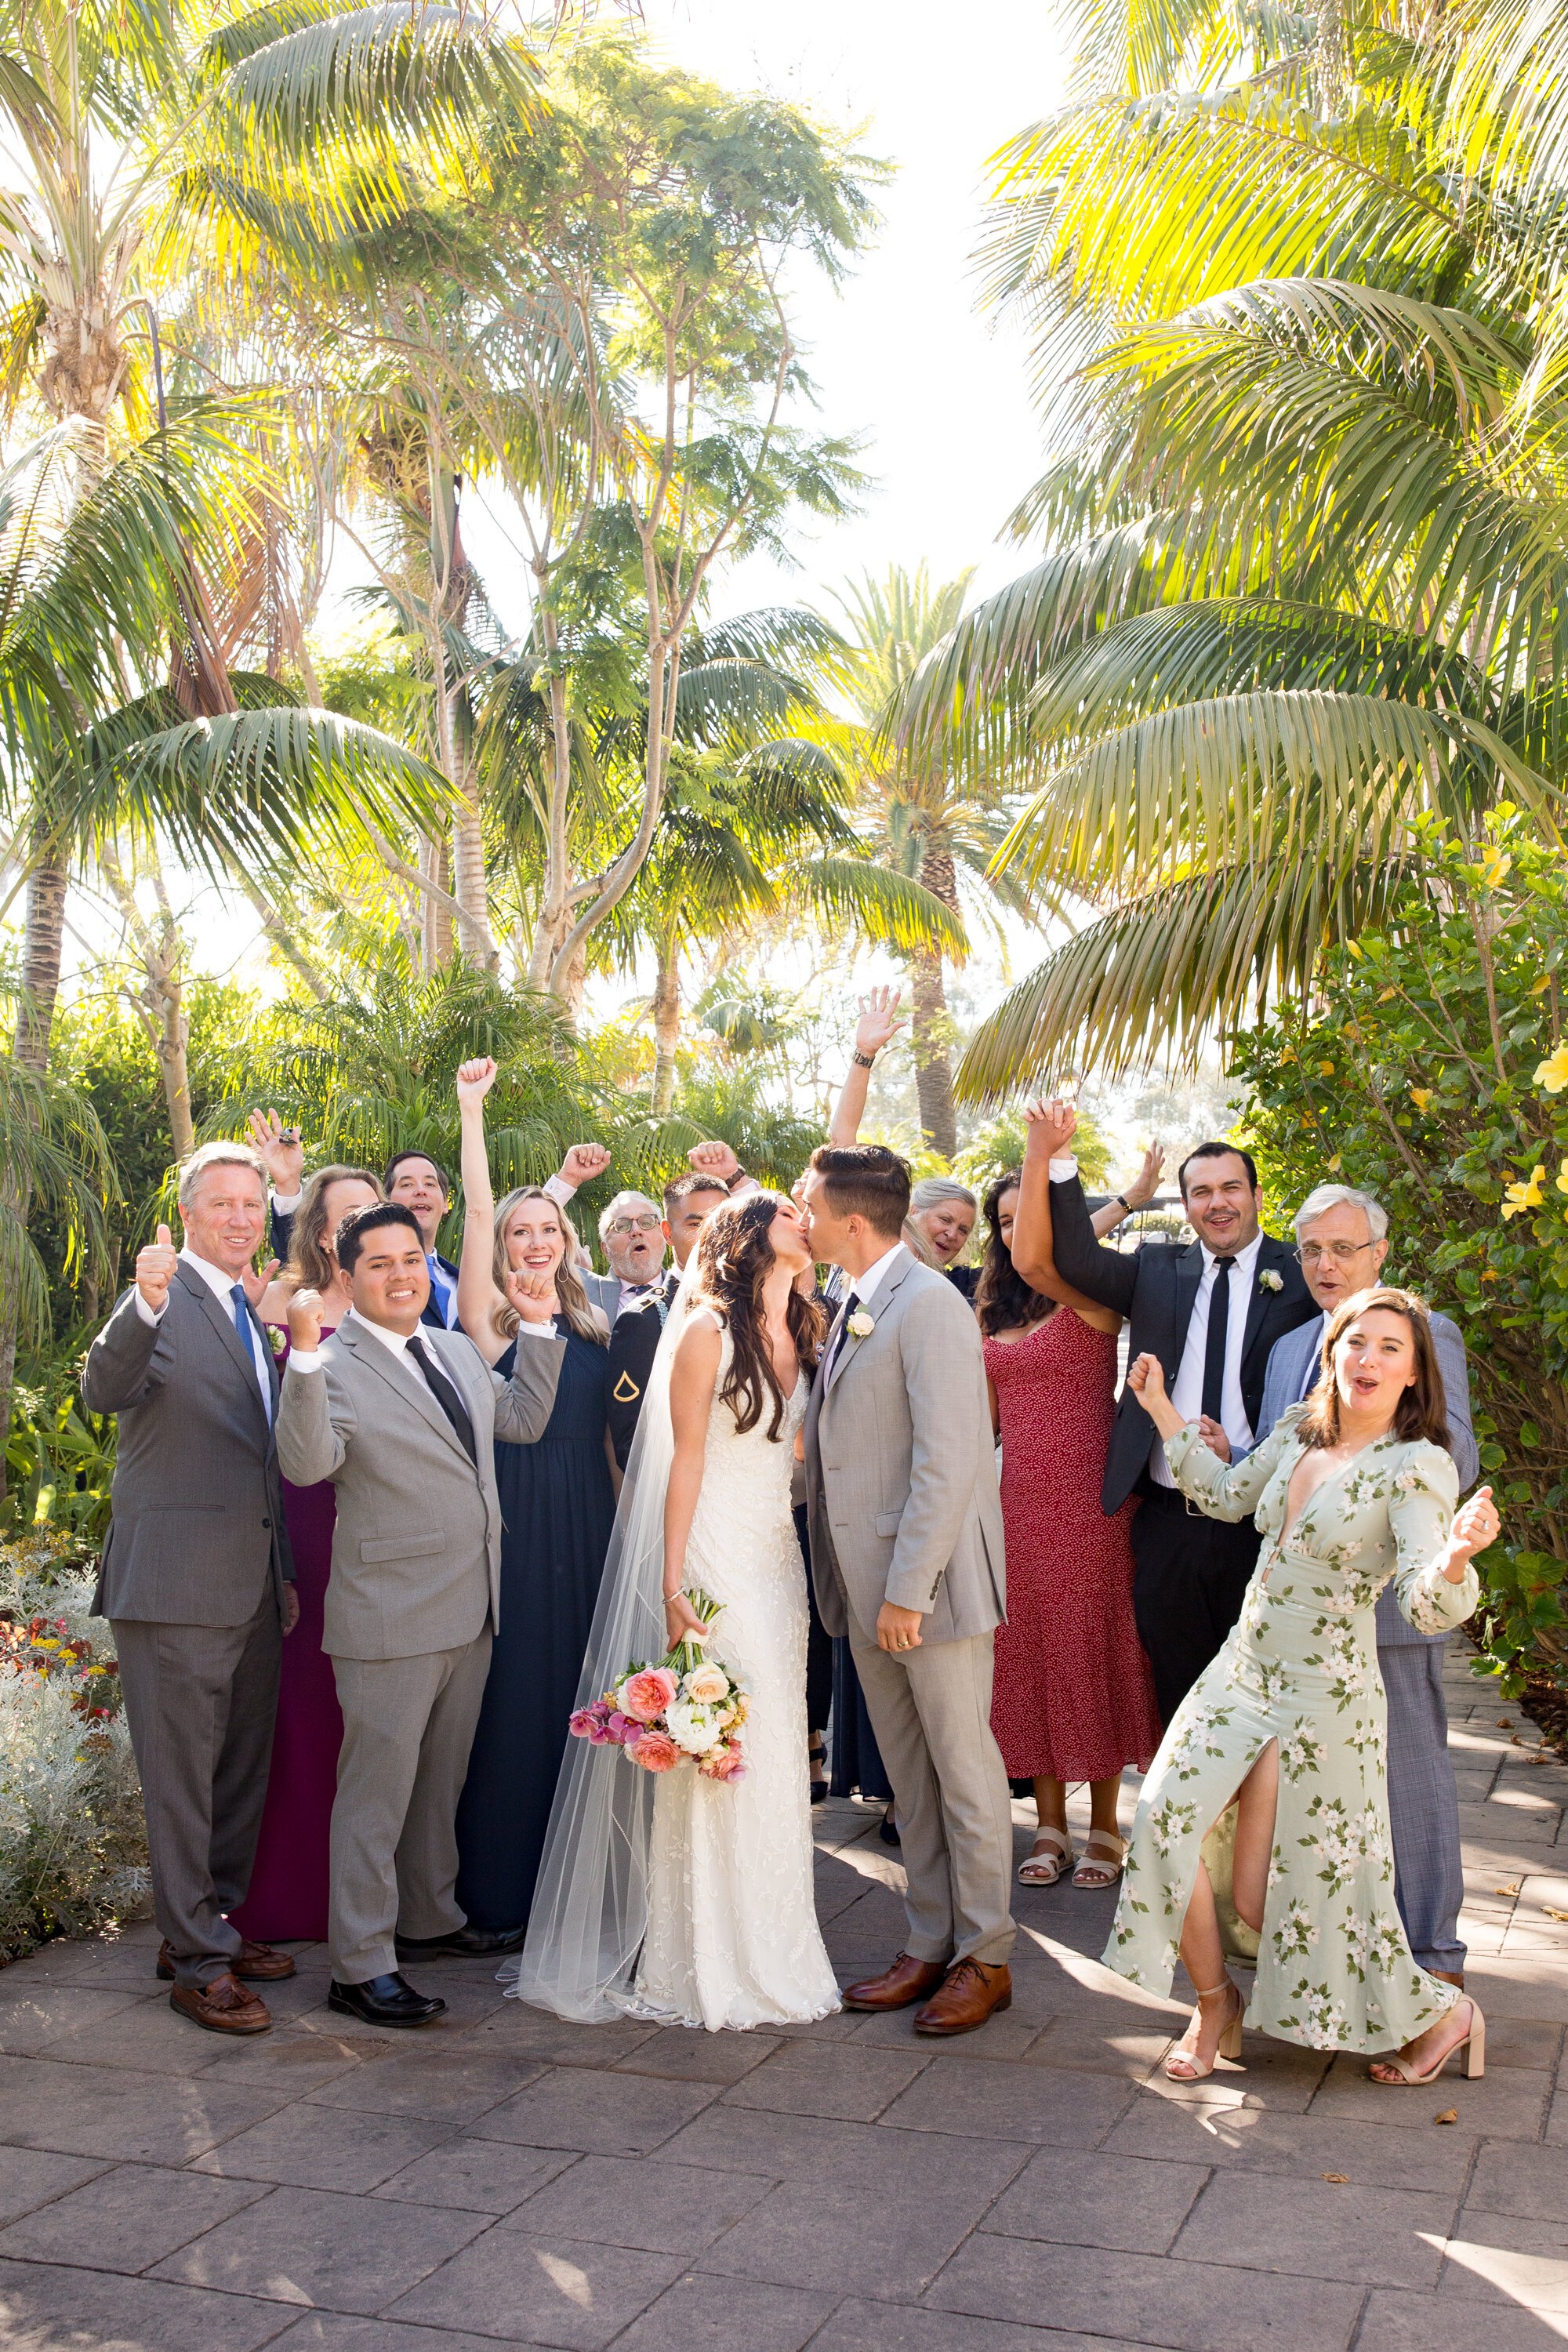 www.santabarbarawedding.com | Kelsey Crews Photo | Ella &amp; Louie | Bride and Groom Kiss Among All Their Wedding Guests